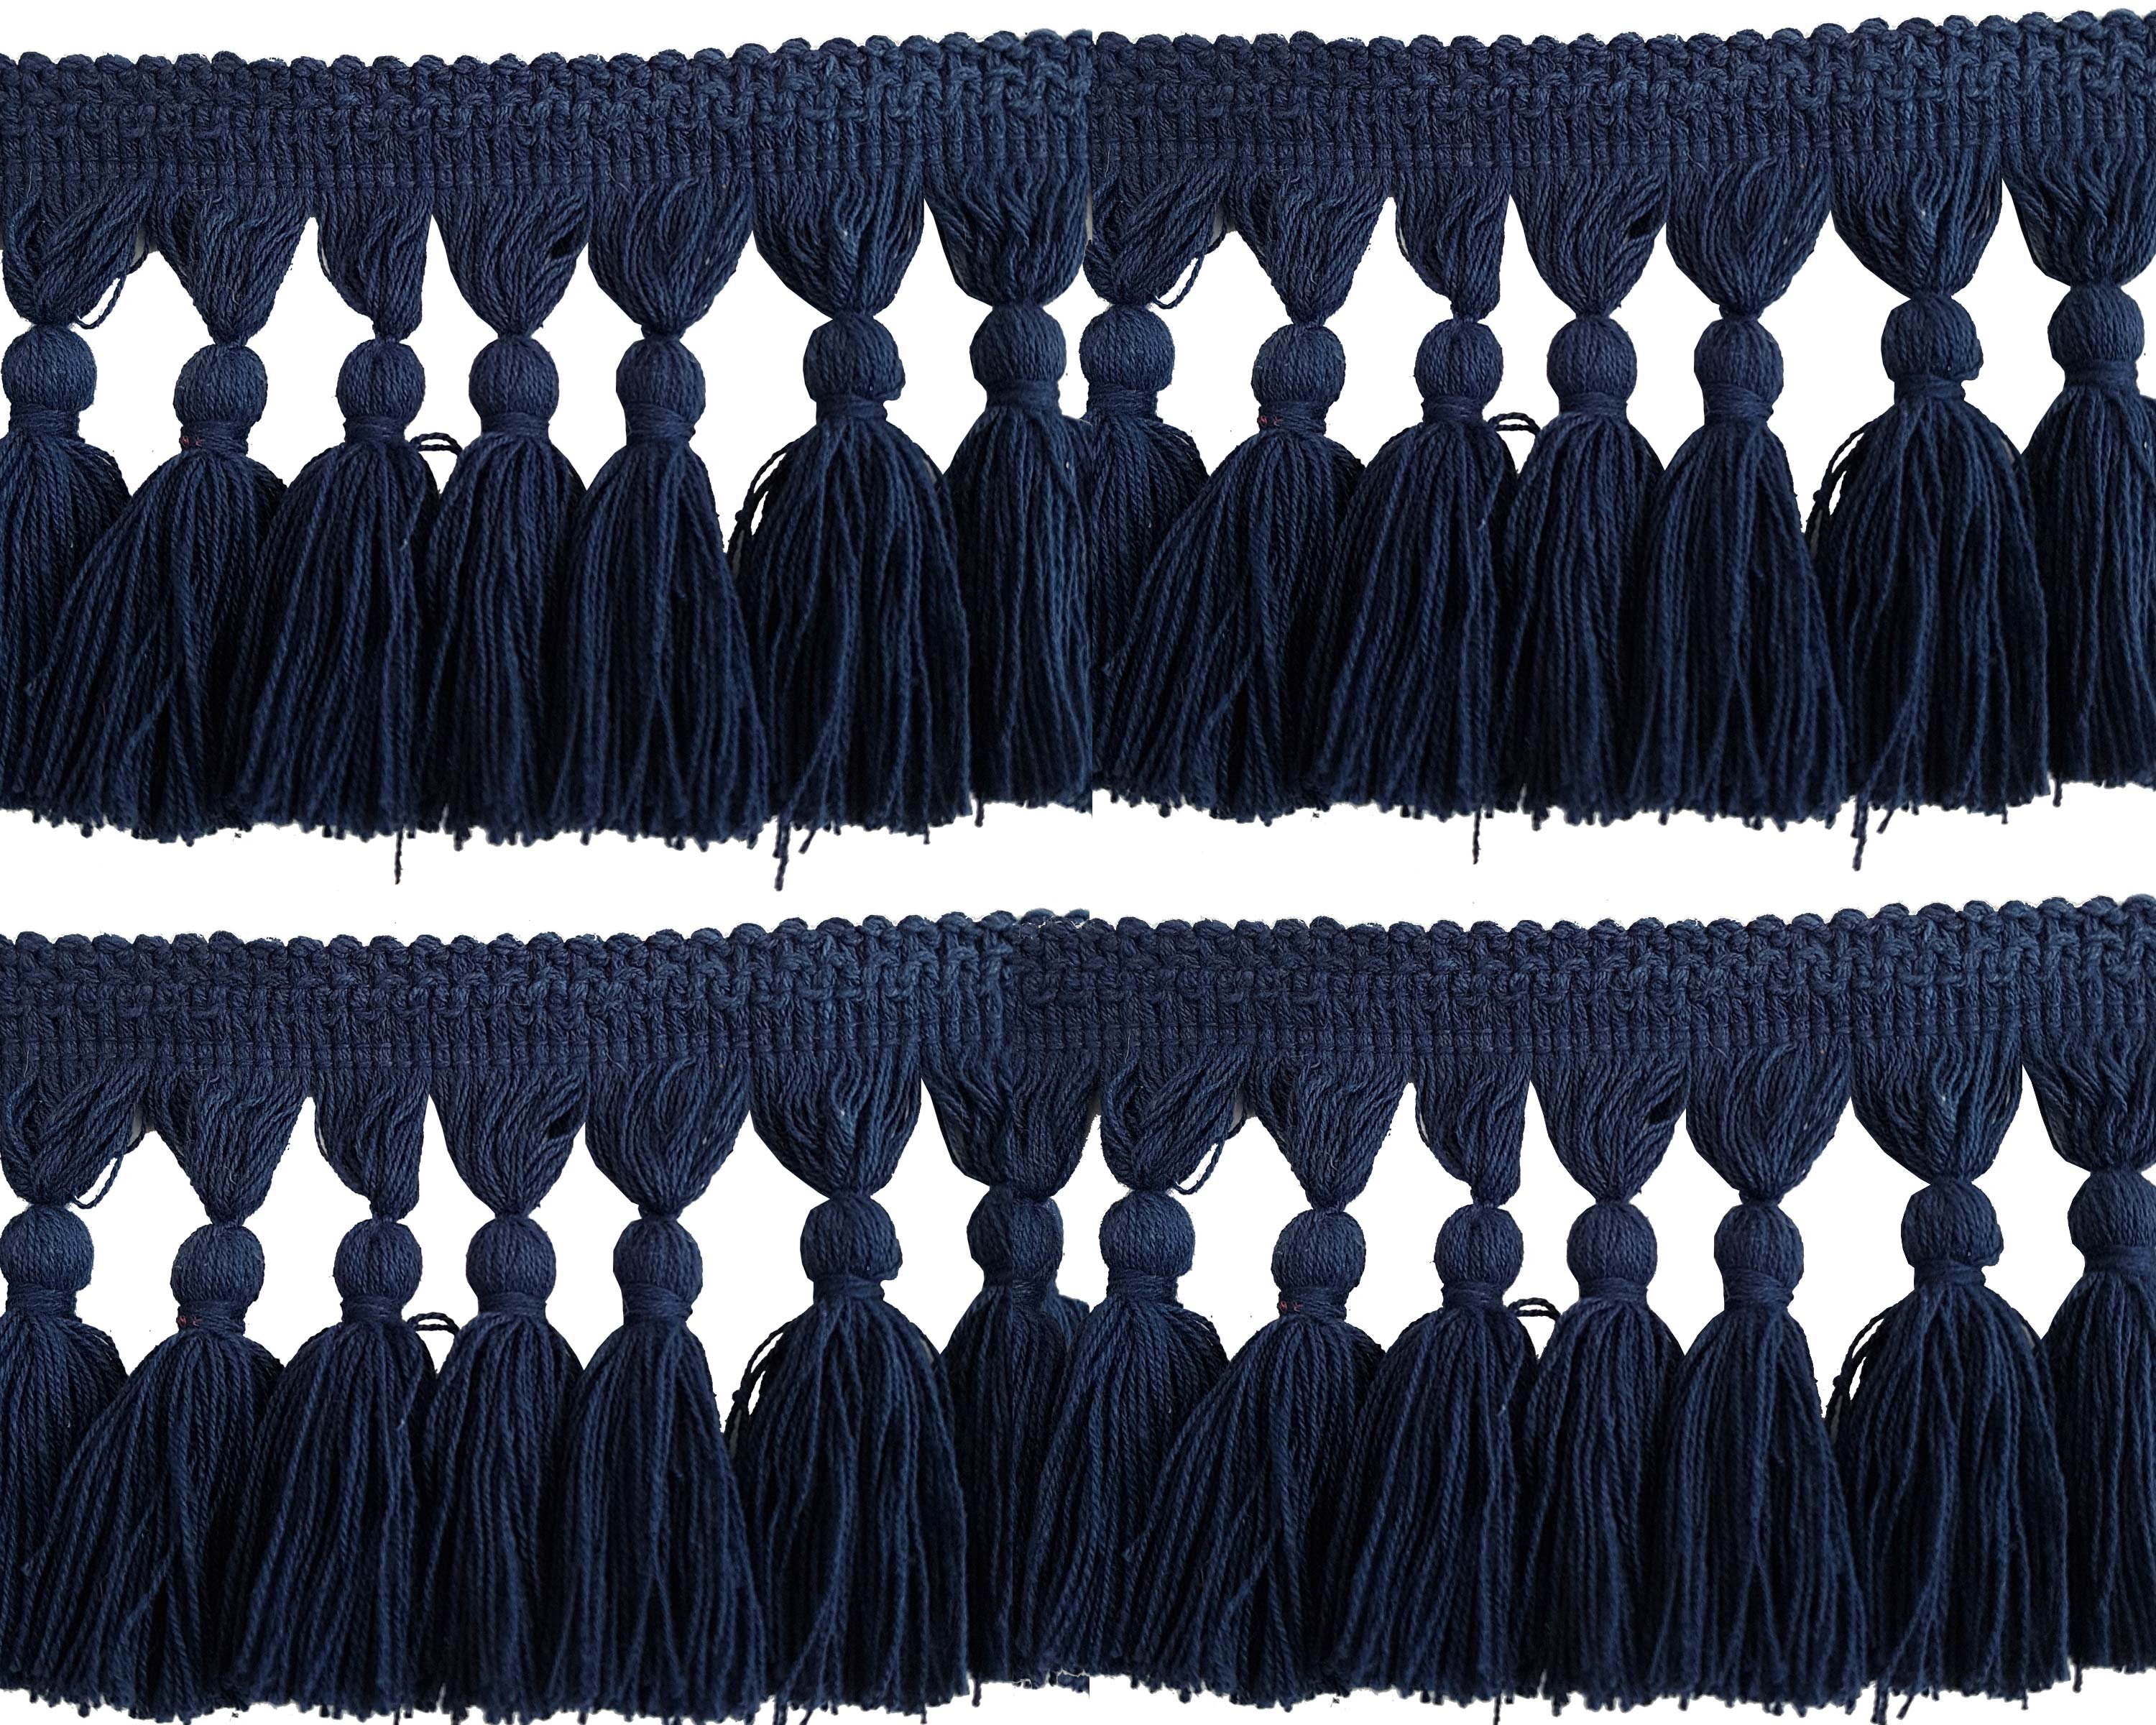 Natural Cotton Tassel Fringing - Navy Blue 95mm long price is per 5 metres